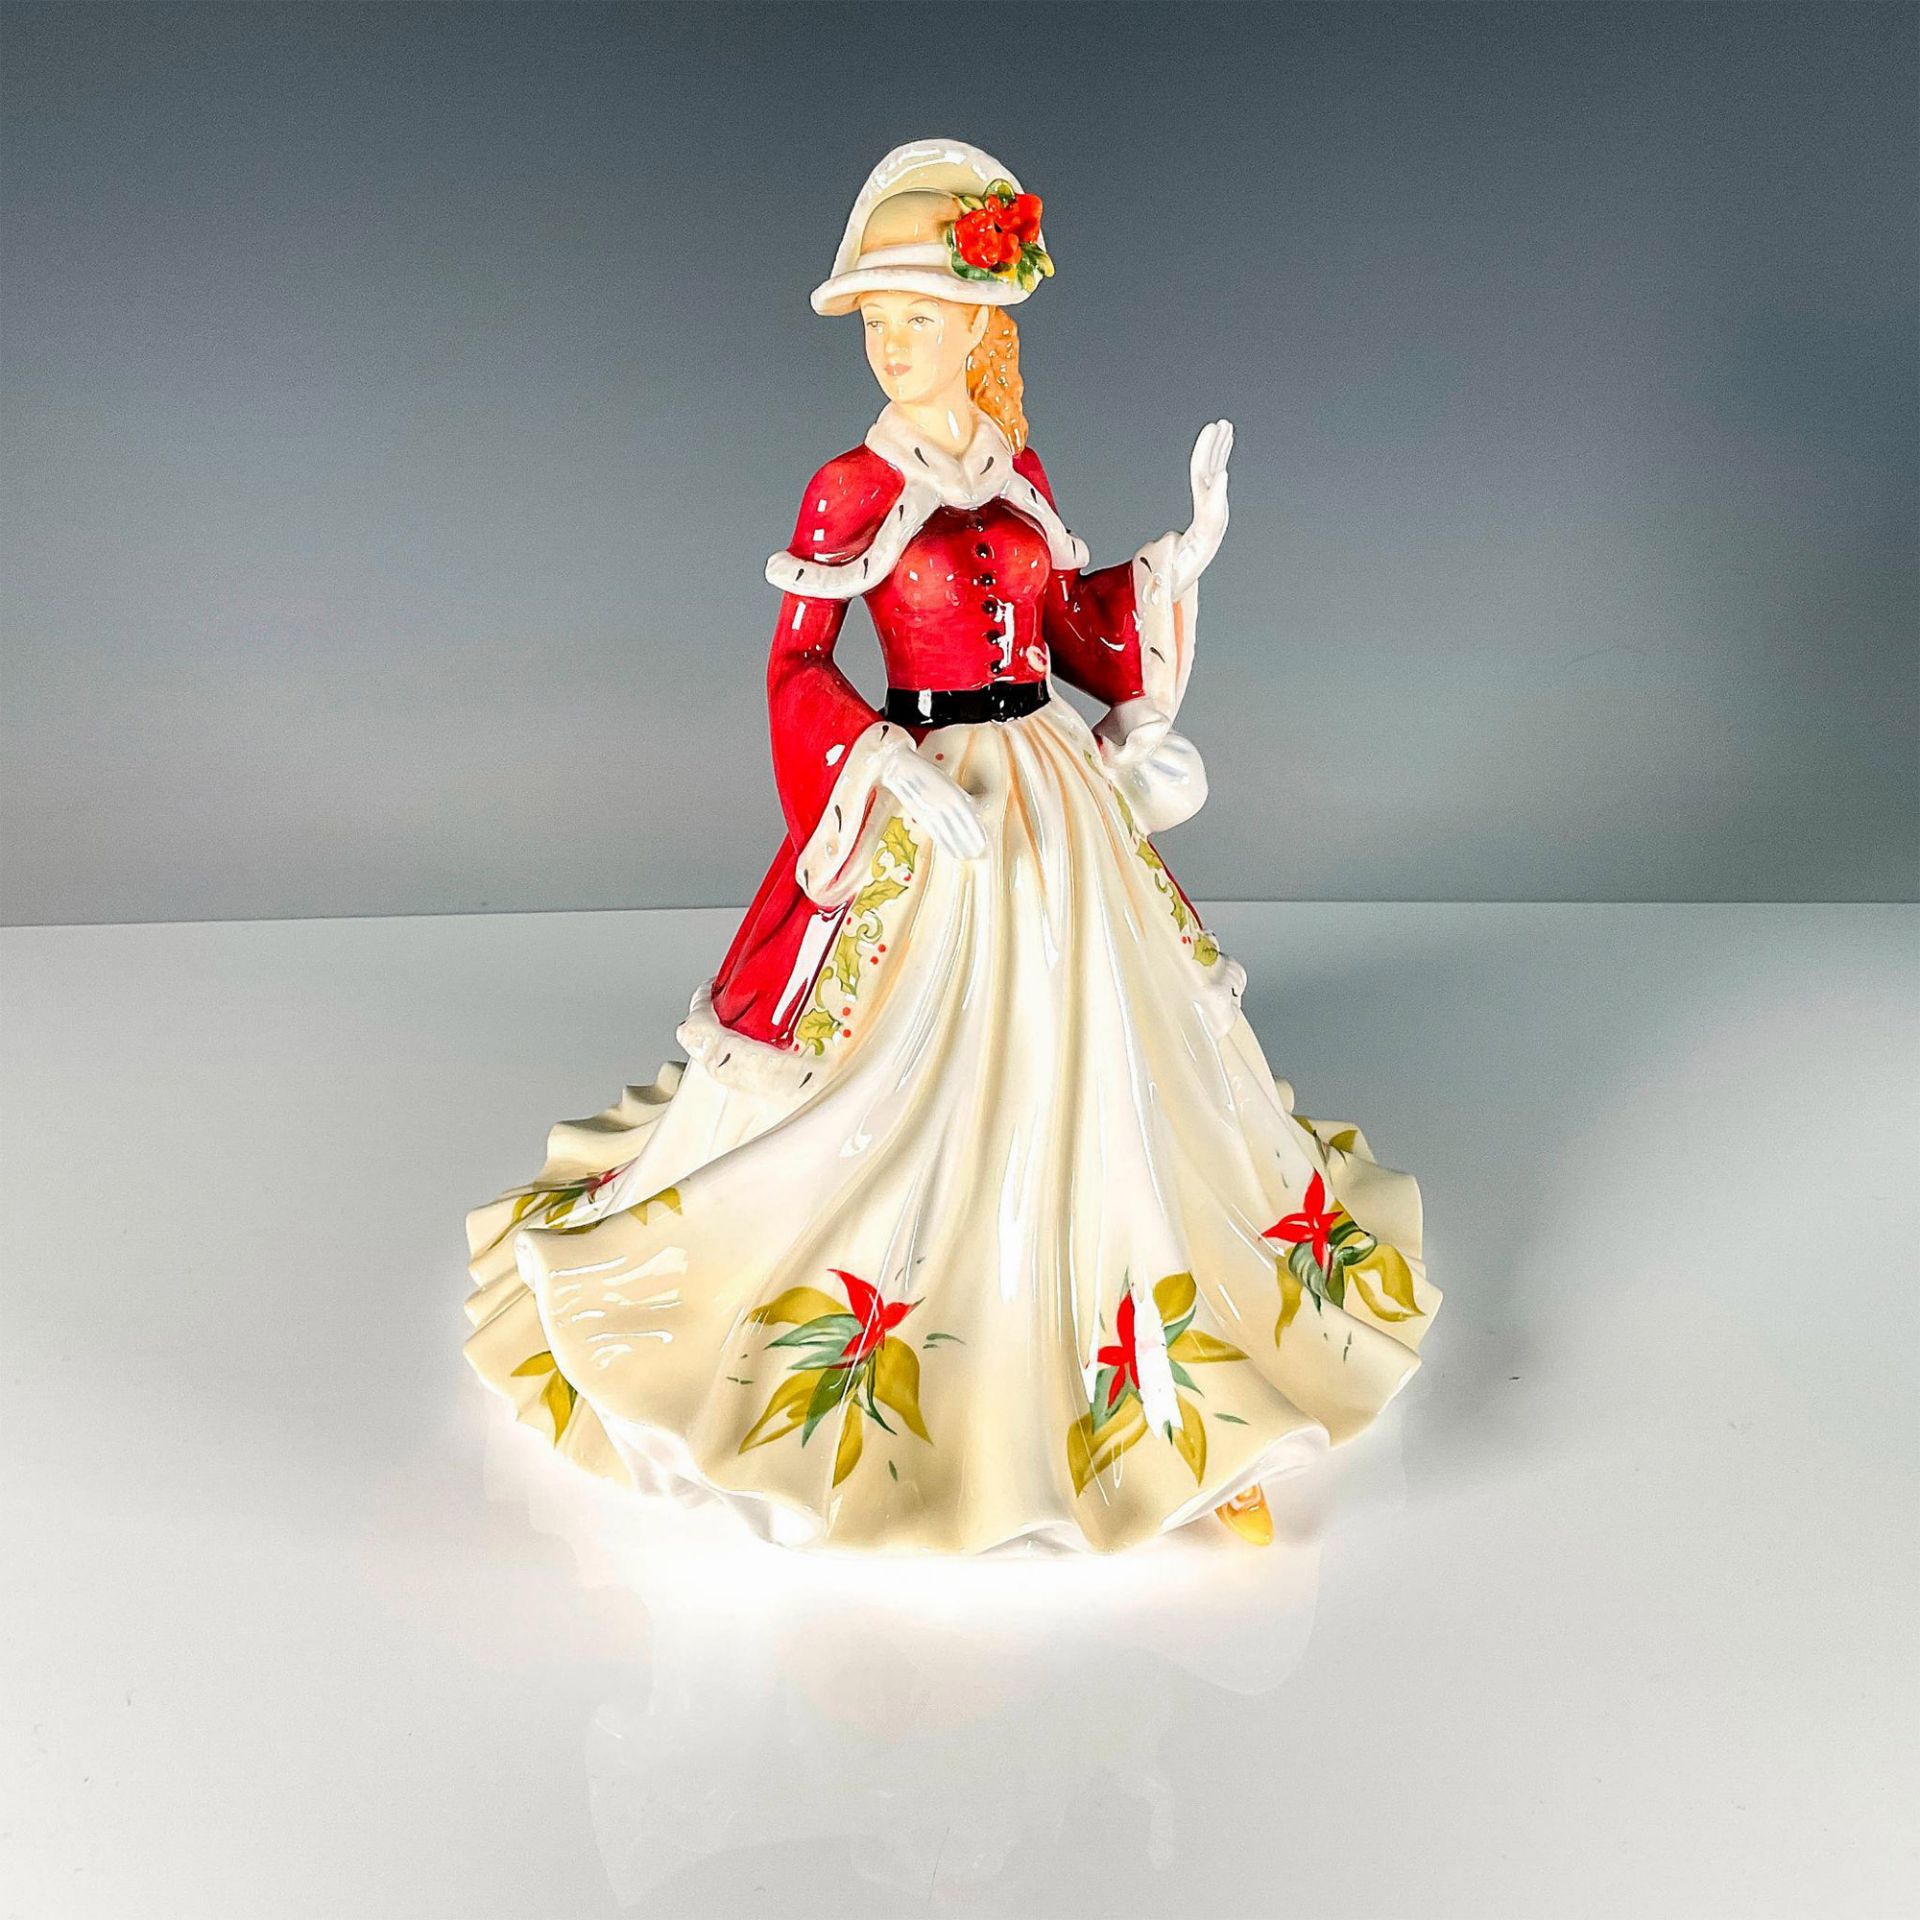 The English Ladies Co Figurine, Seasons Greeting, Signed